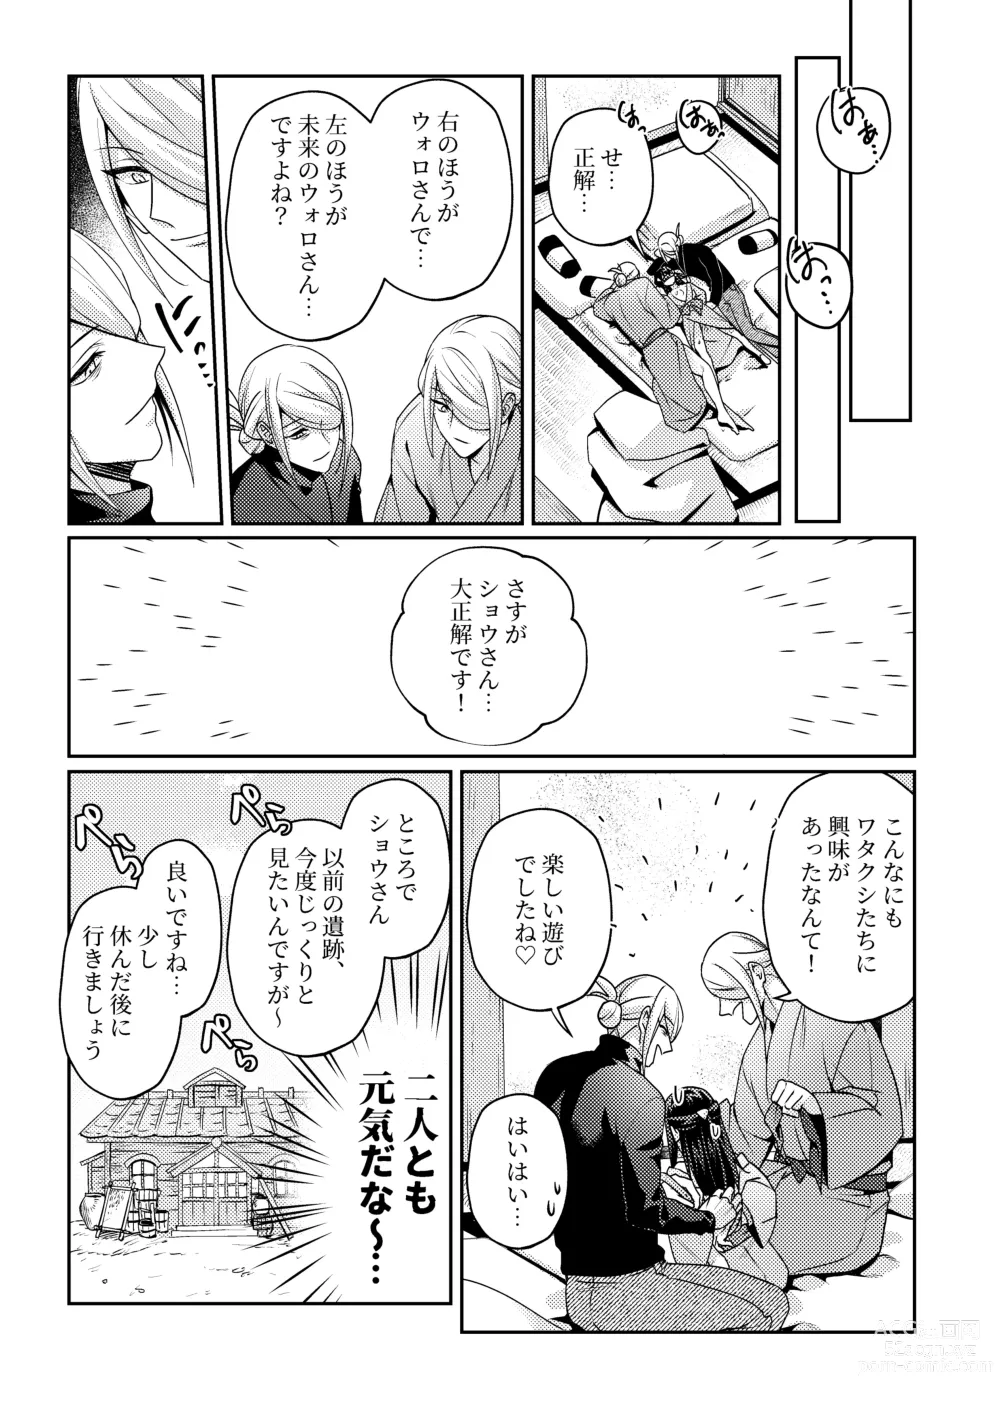 Page 17 of doujinshi Mekakushi VoShou